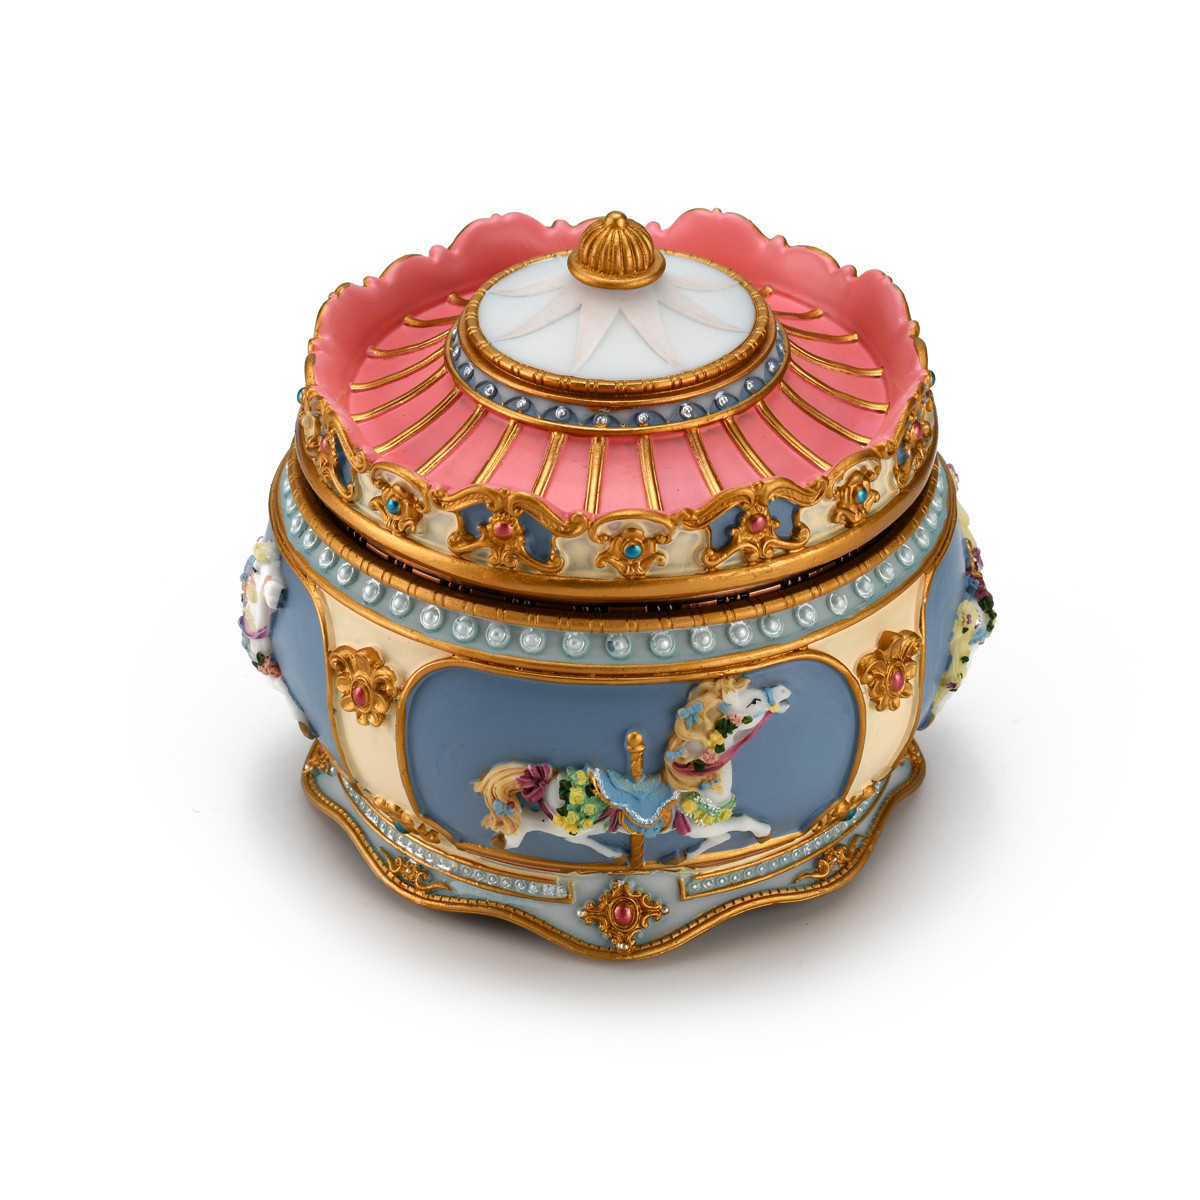 Image of Carousel Themed Animated Musical Trinket Carousel Box